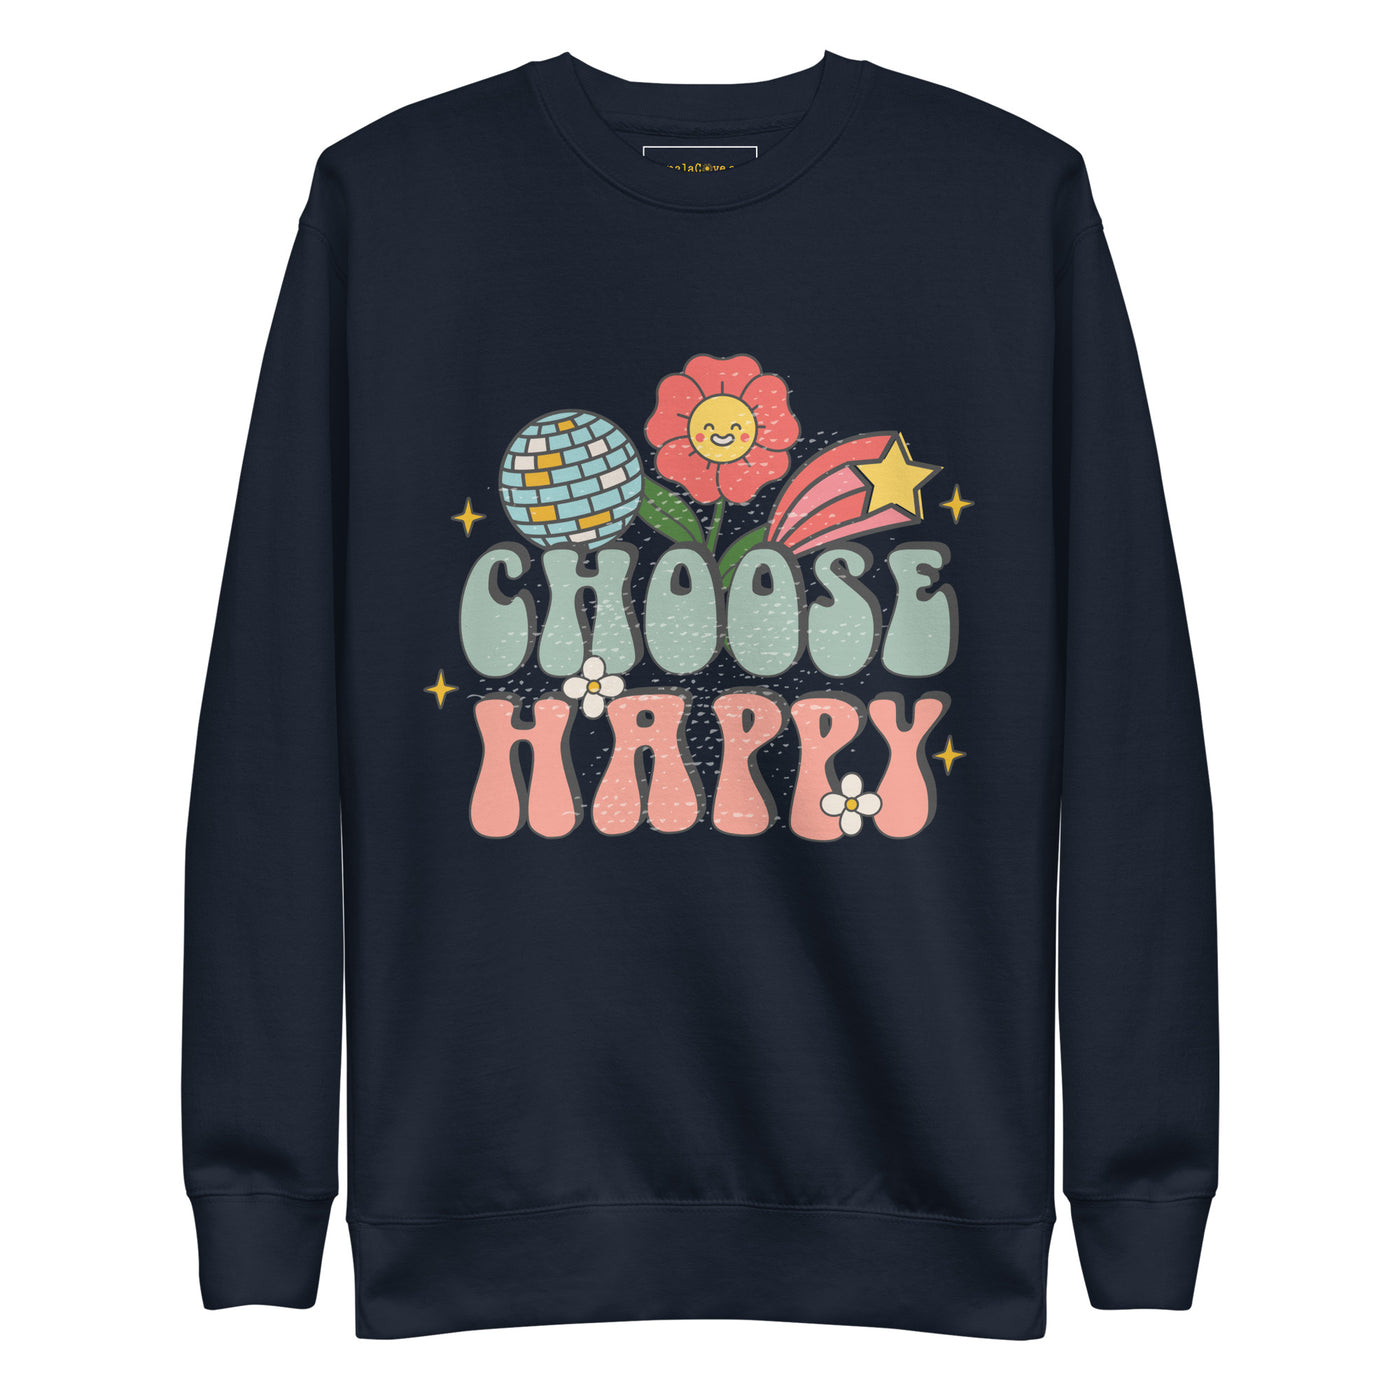 Unisex-Premium-Sweatshirt "Choose Happy Disco".